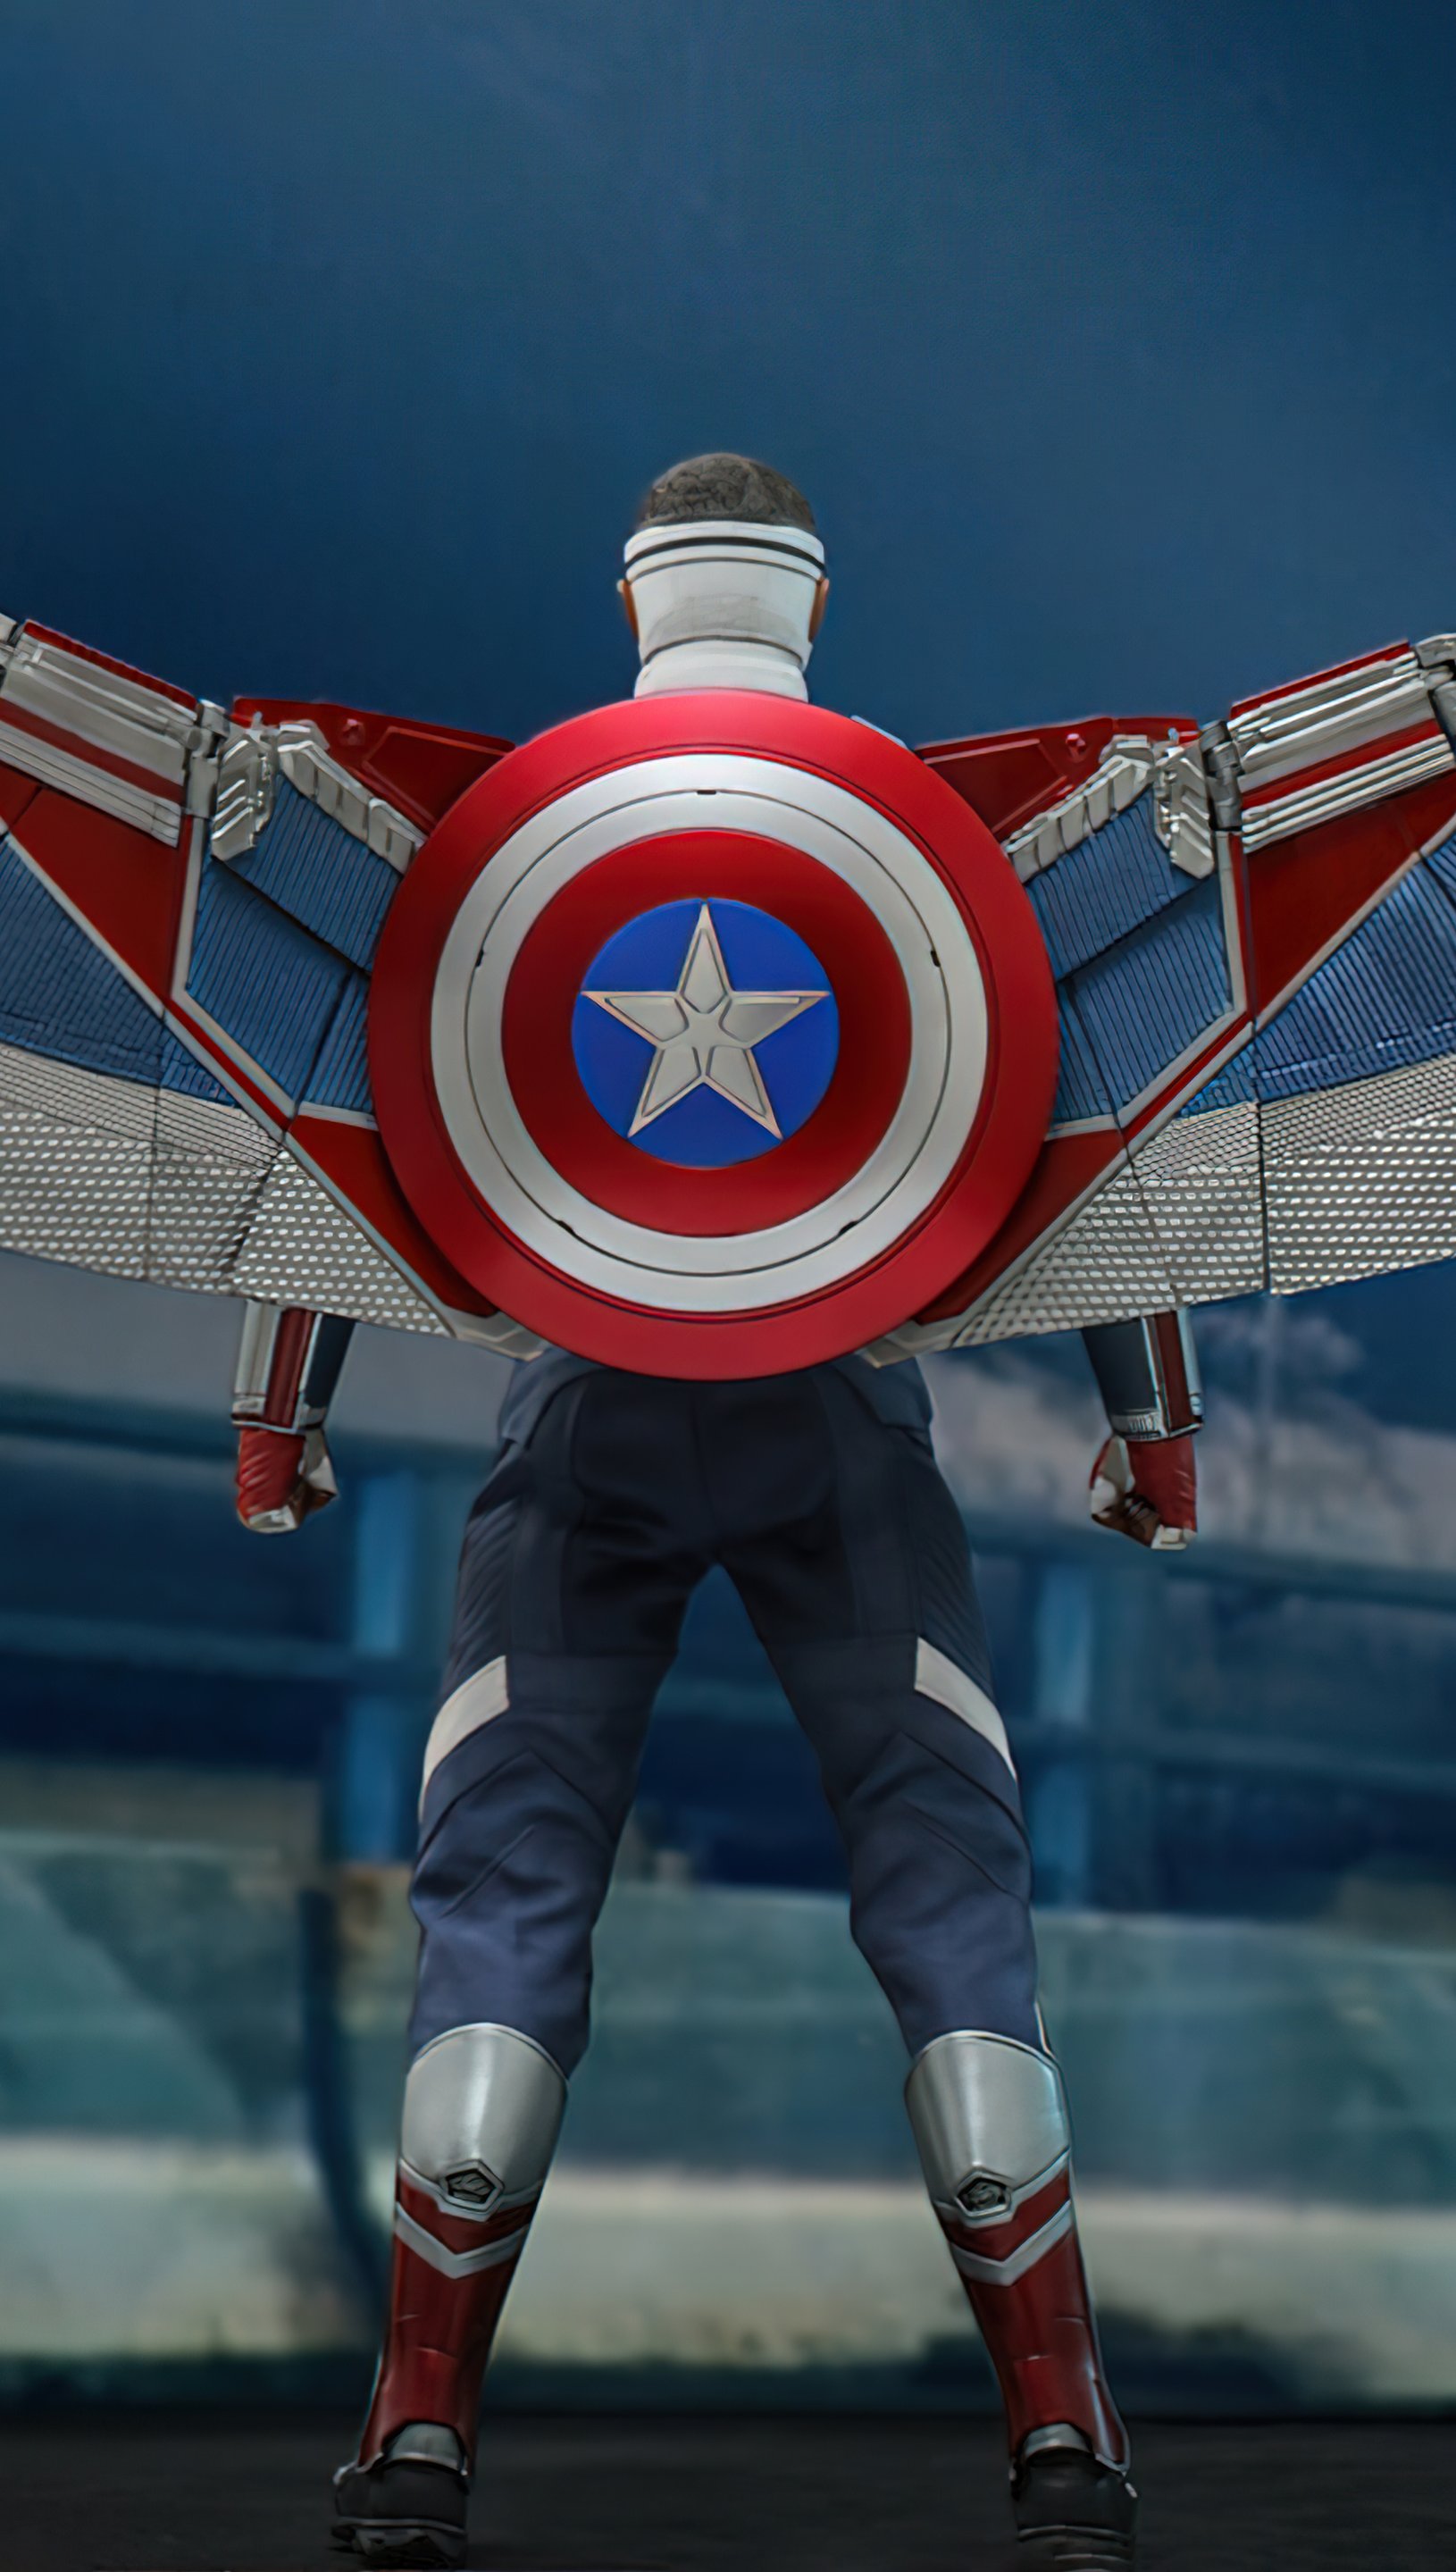 Captain America The Falcon and the winter soldier Wallpaper 5k Ultra HD